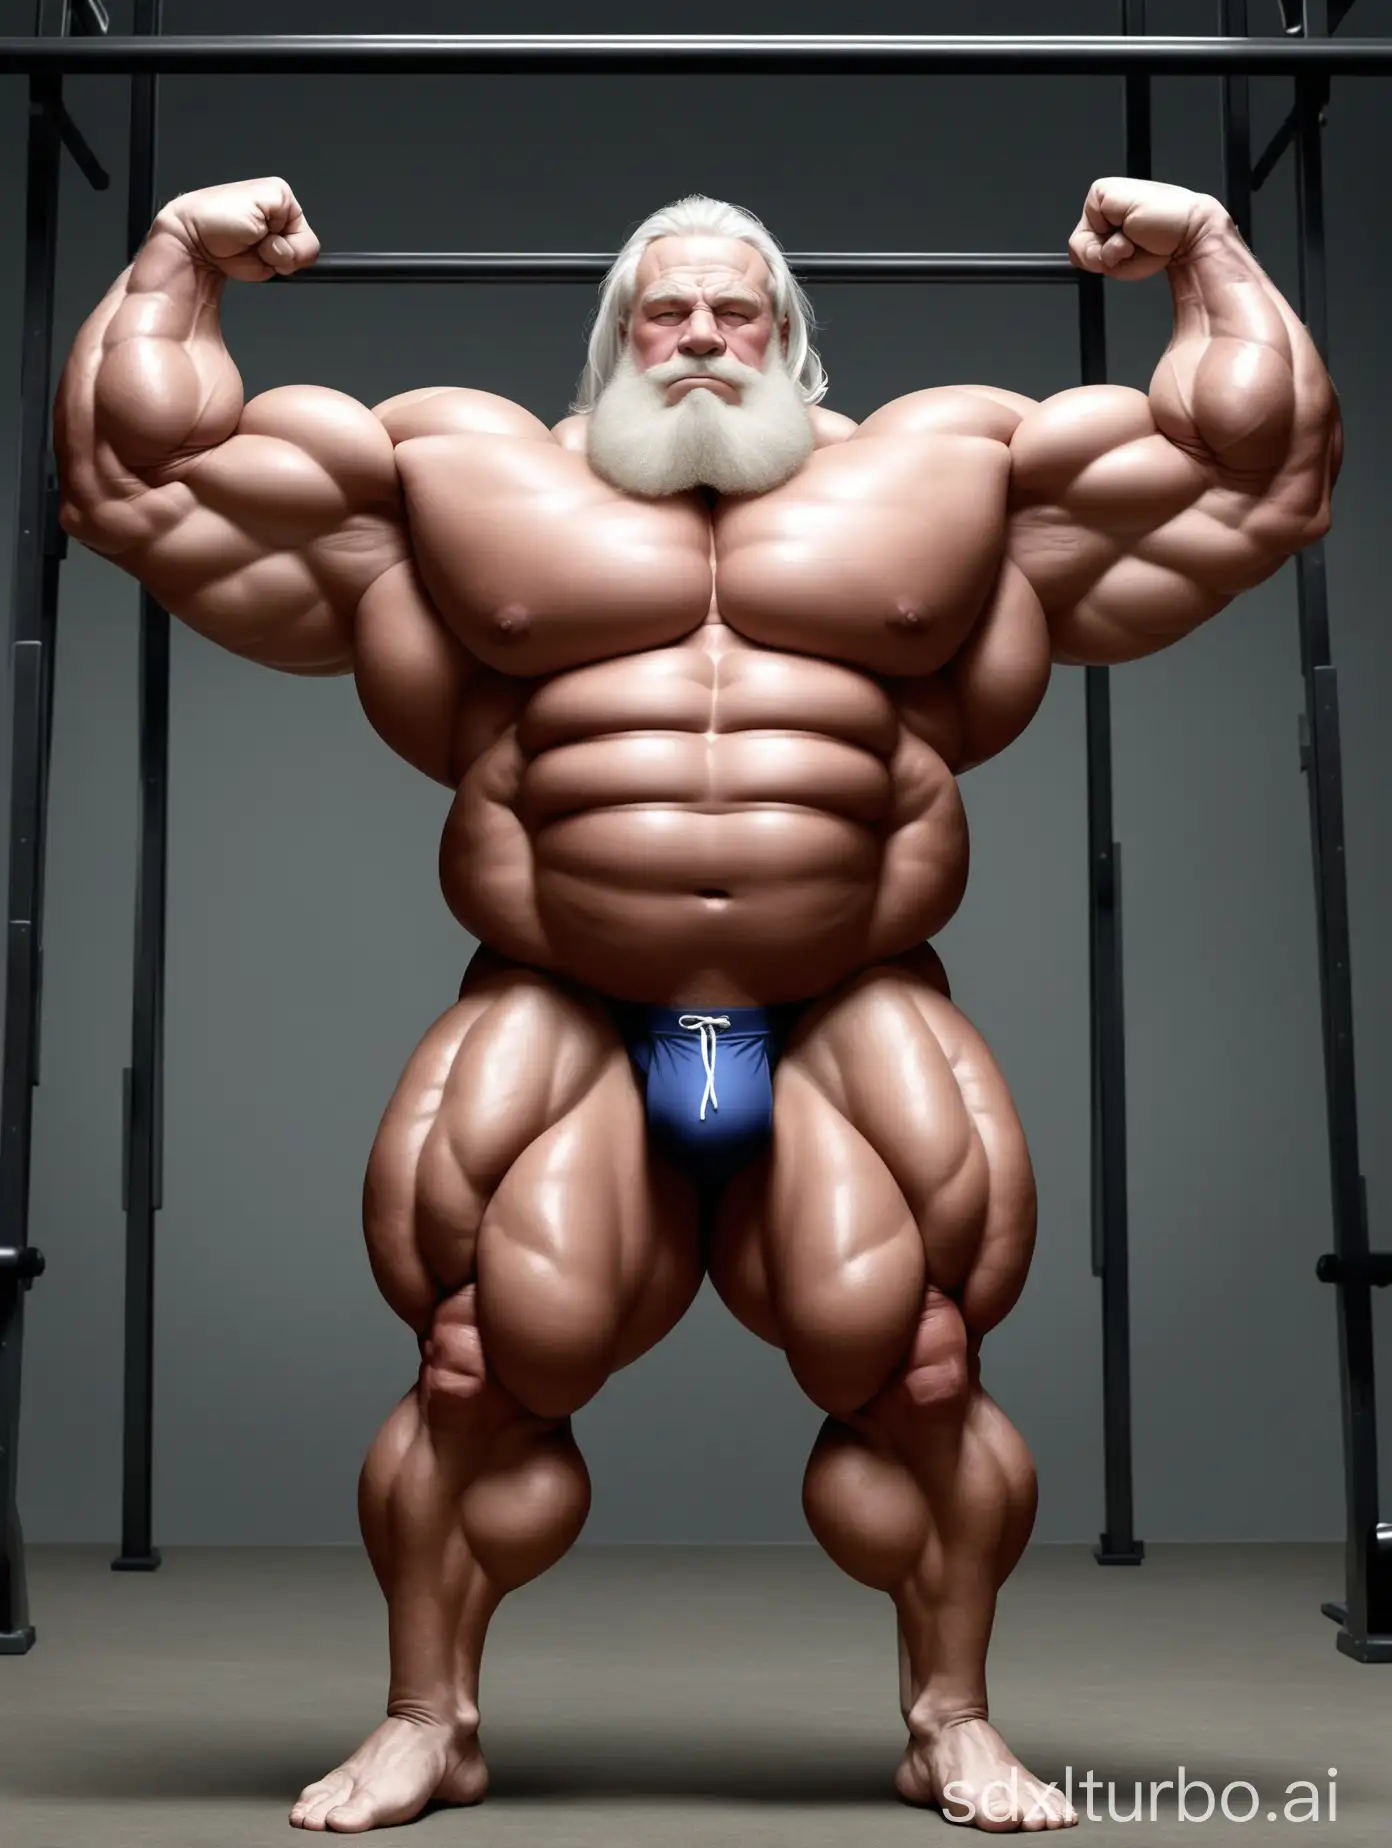 Massive-Muscle-Stud-Showing-Giant-Biceps-in-Underwear